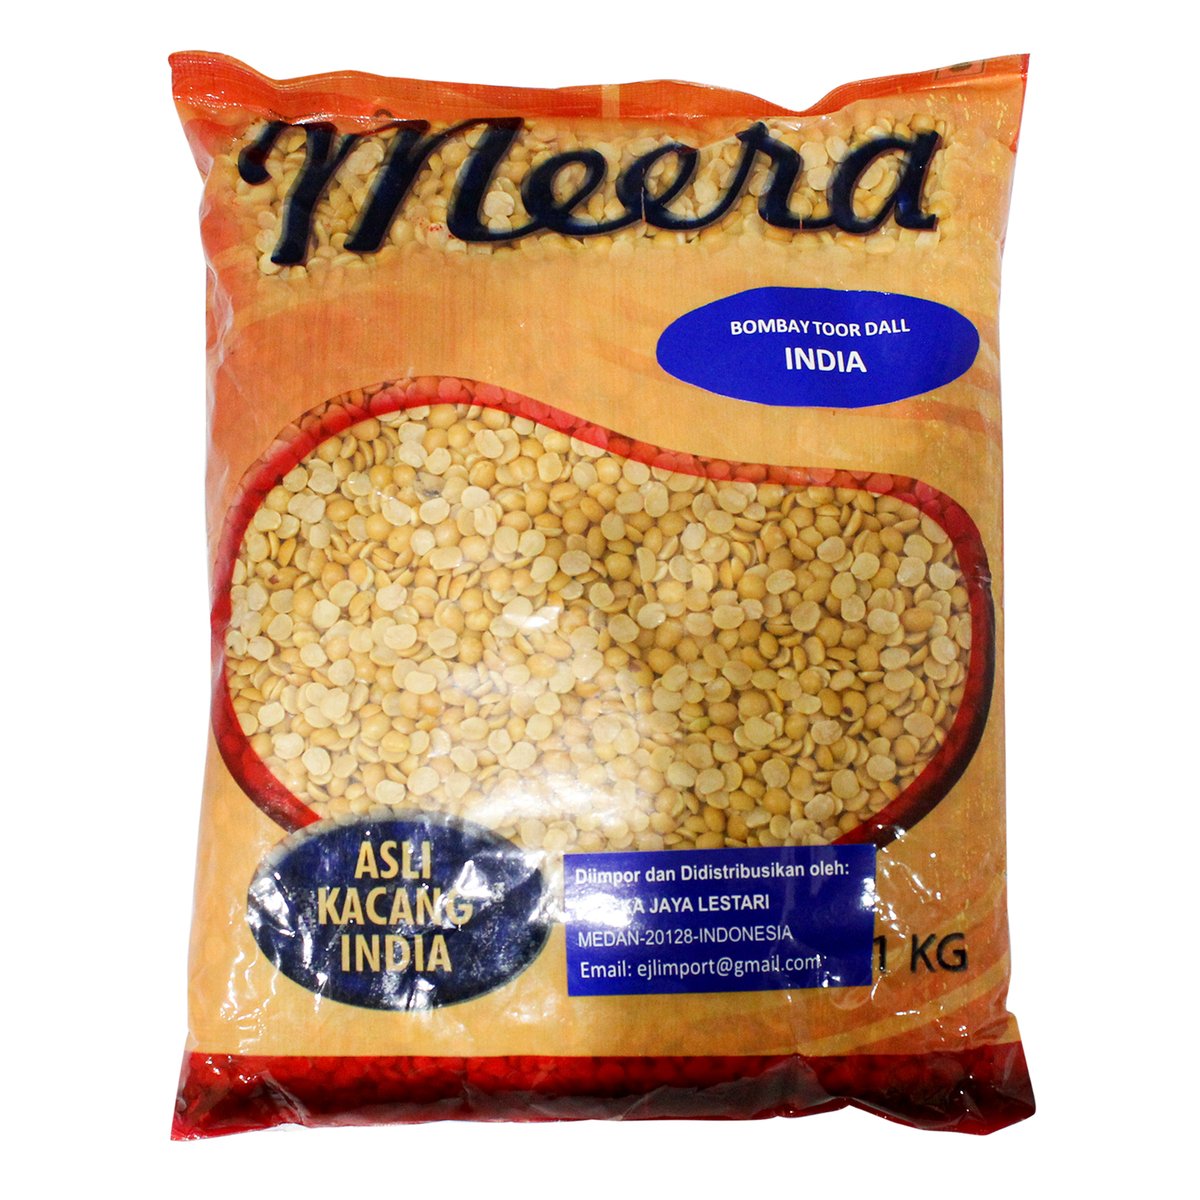 Meera Bombay Toor Dall India 1kg